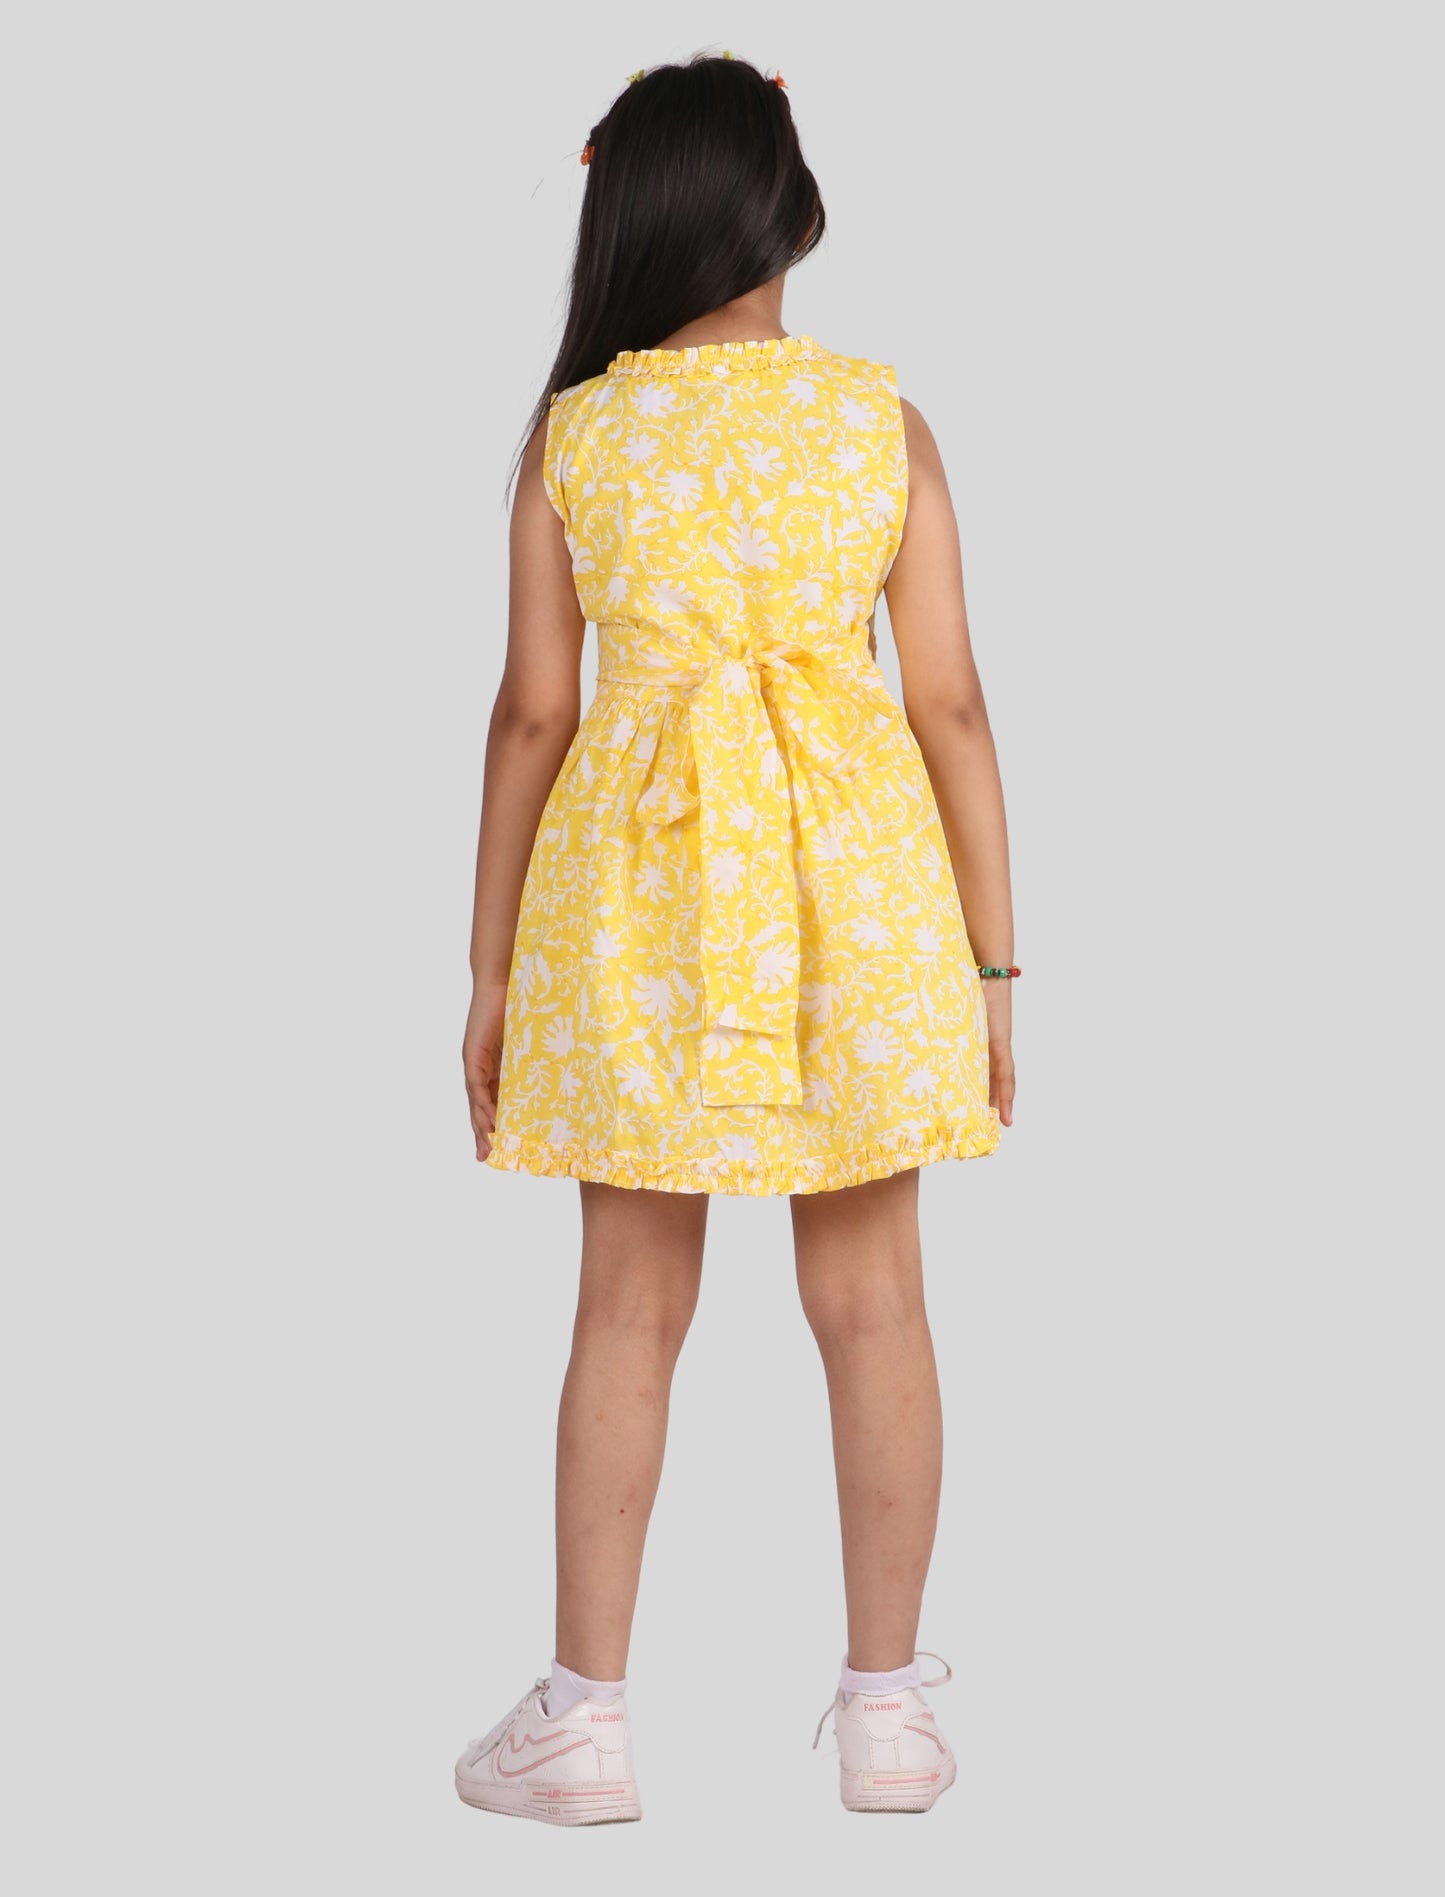 Girls Kids Hand Block Printed Floral Summer Wrap Dress (Yellow)